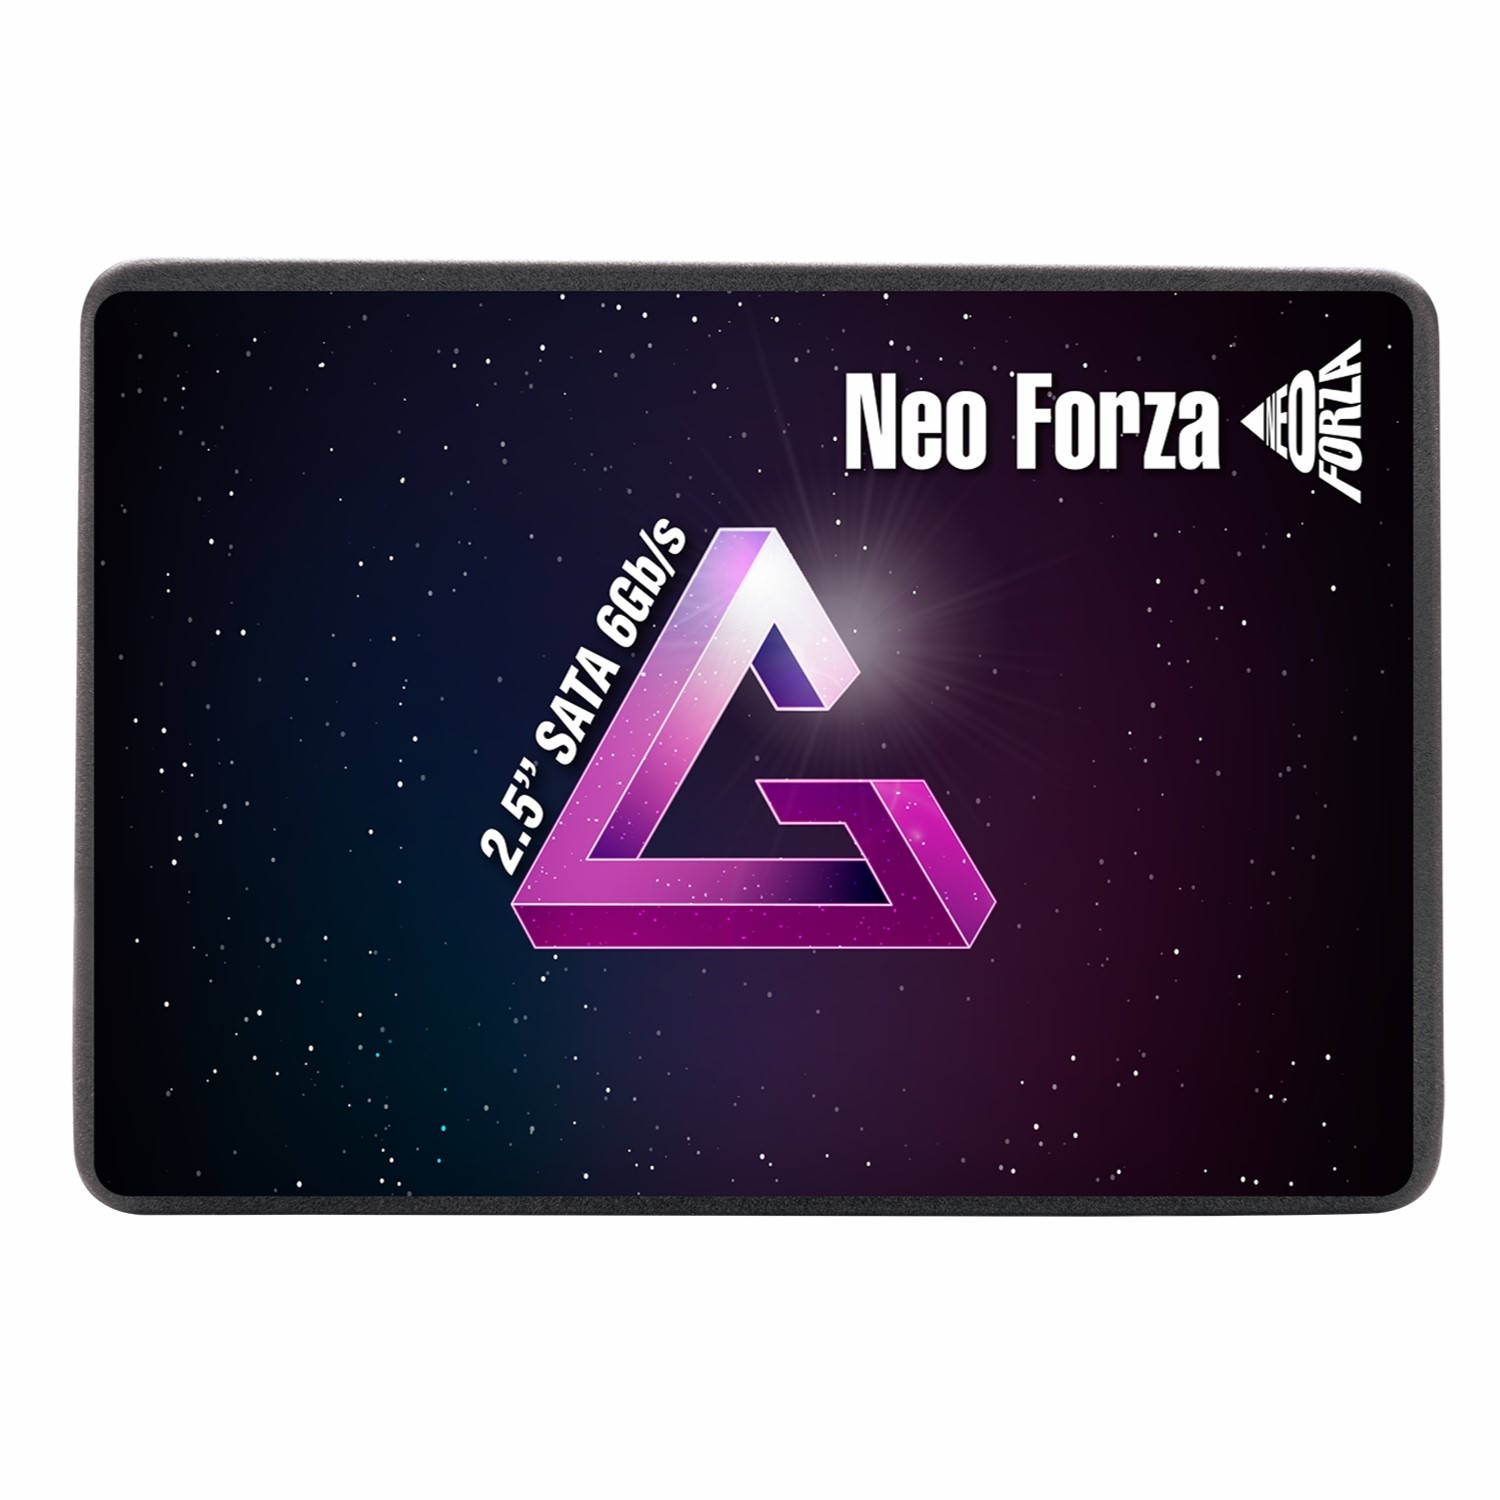 حافظه اس اس دی Neo Forza NFS01 128GB